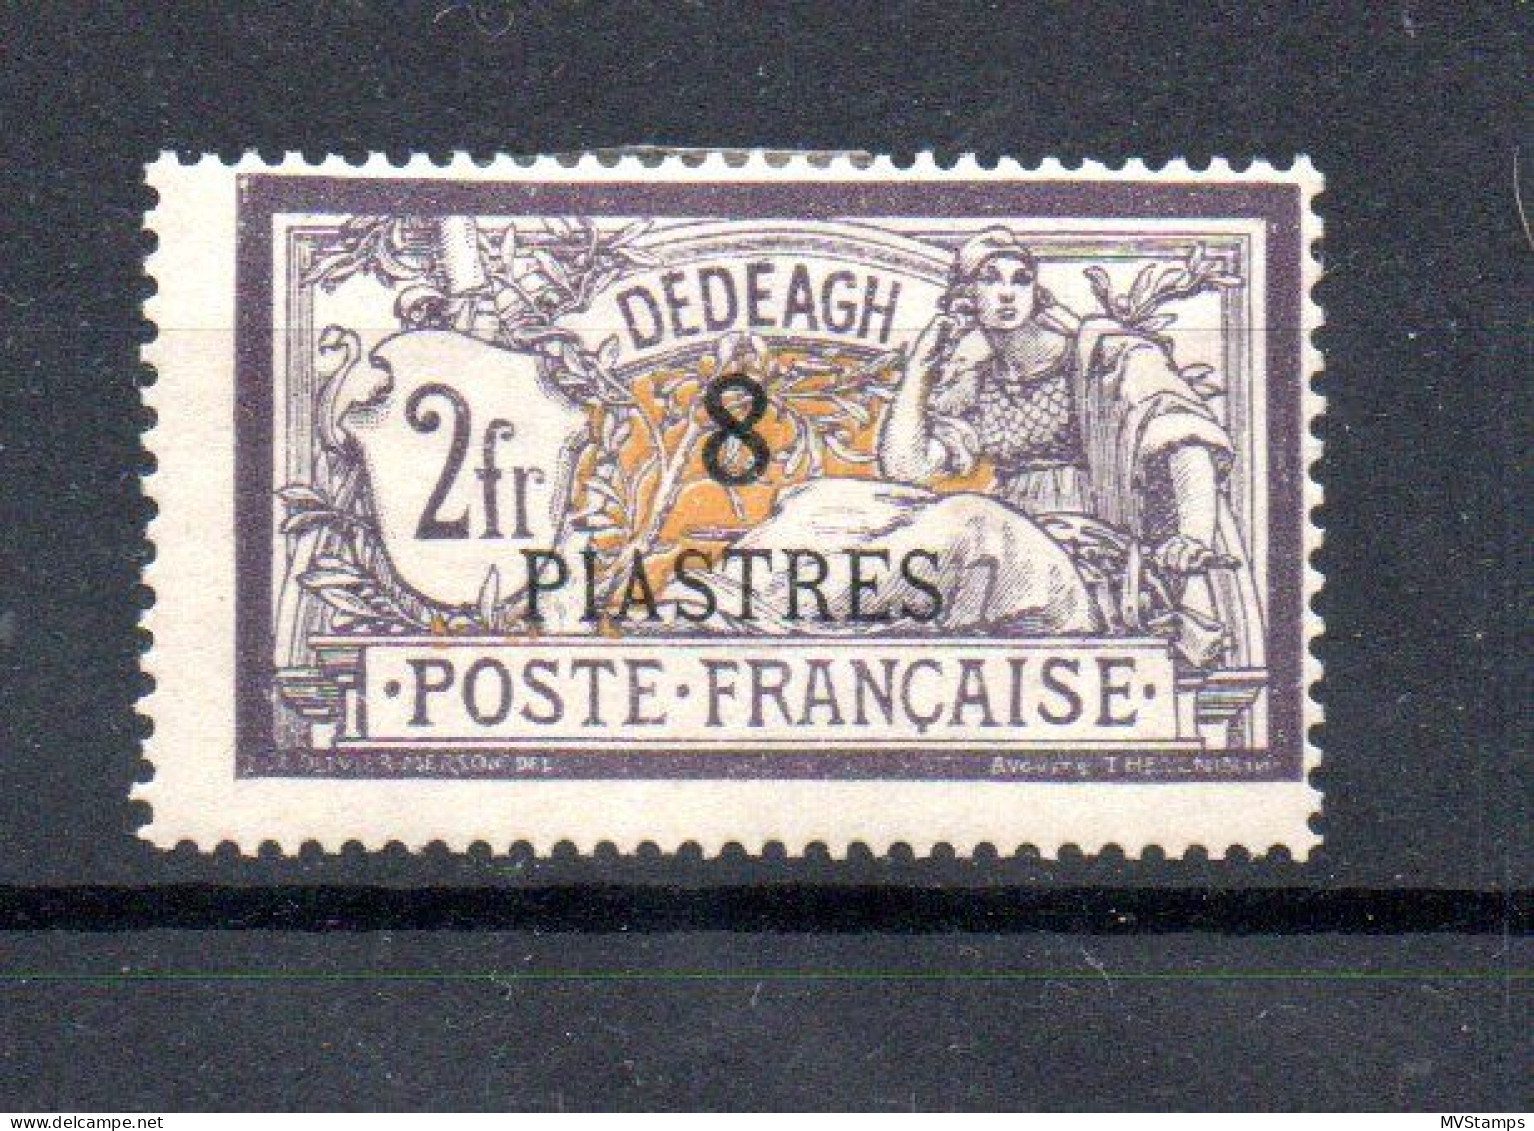 France Post In Dedeagh 1900 Old Definitive Stamp (Michel 8) MLH - Unused Stamps